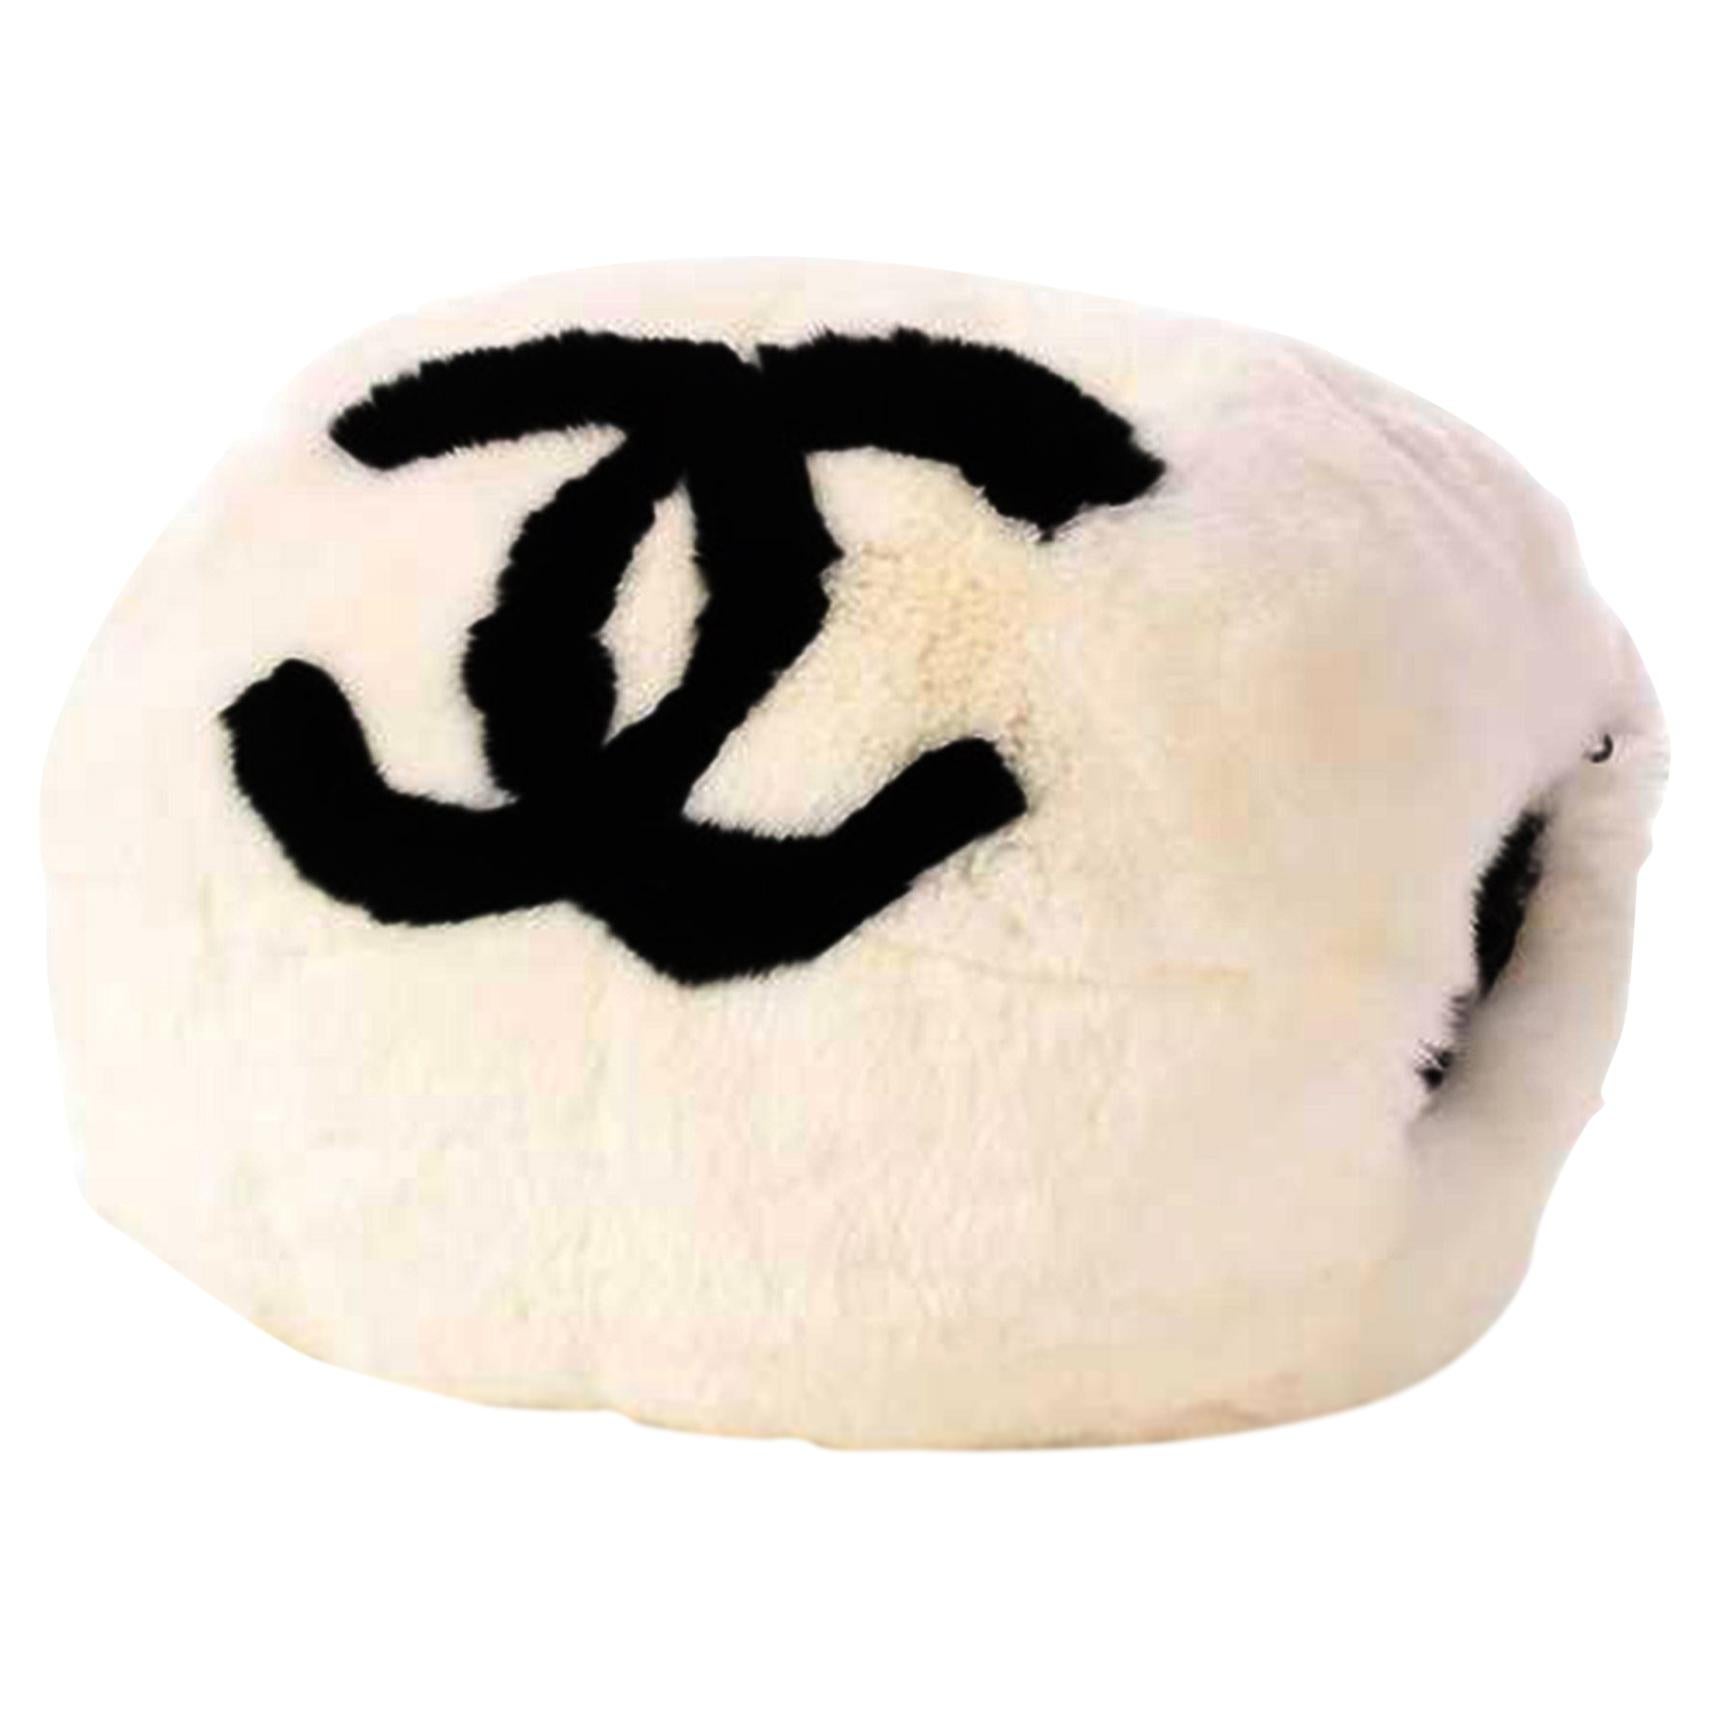 Chanel Cc Logo Muff Vintage Rare Limited Edition White Fur Satchel